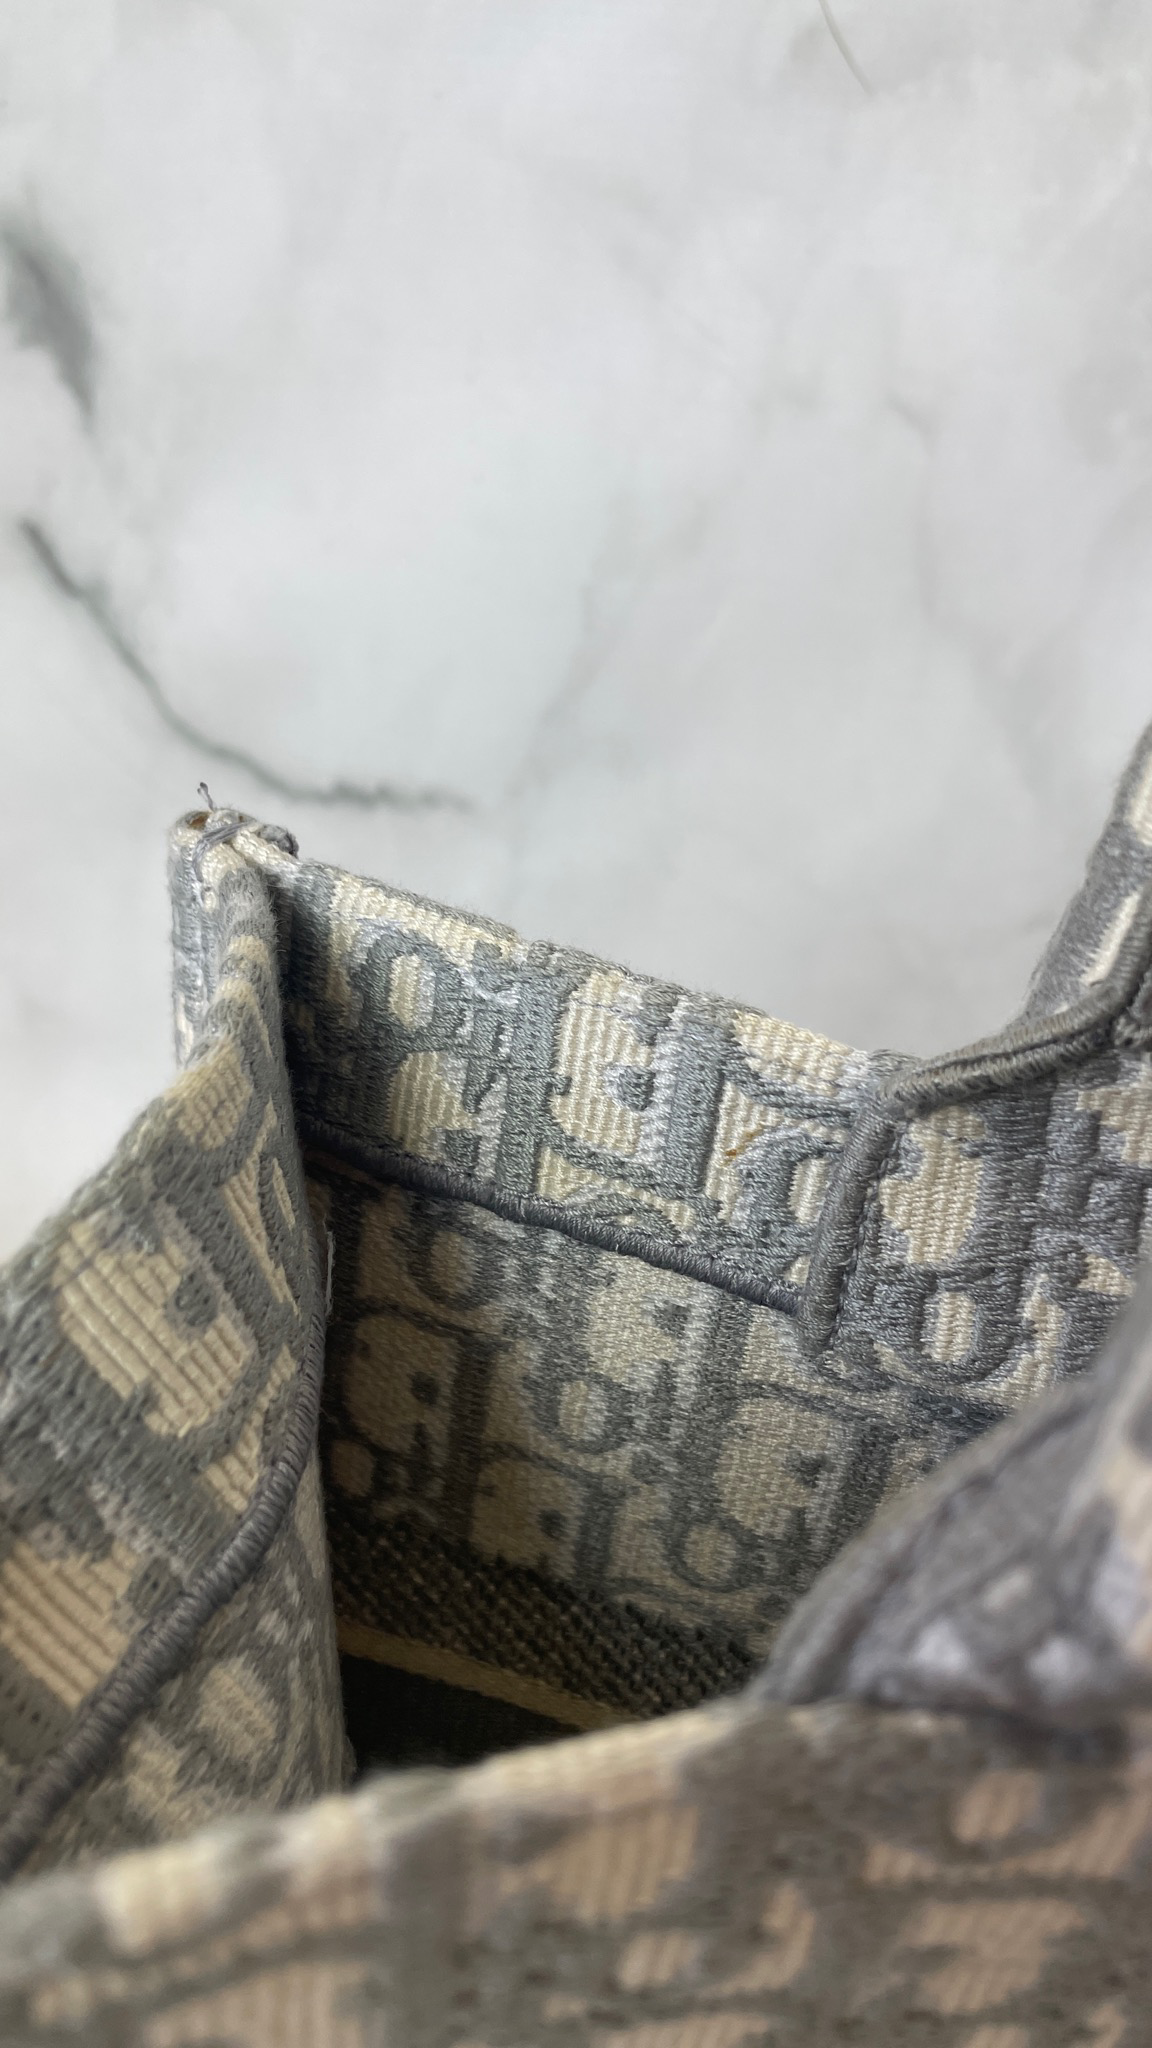 Christian Dior Oblique Book Tote Medium Bag Canvas Navy M1296ZRIW 90190476